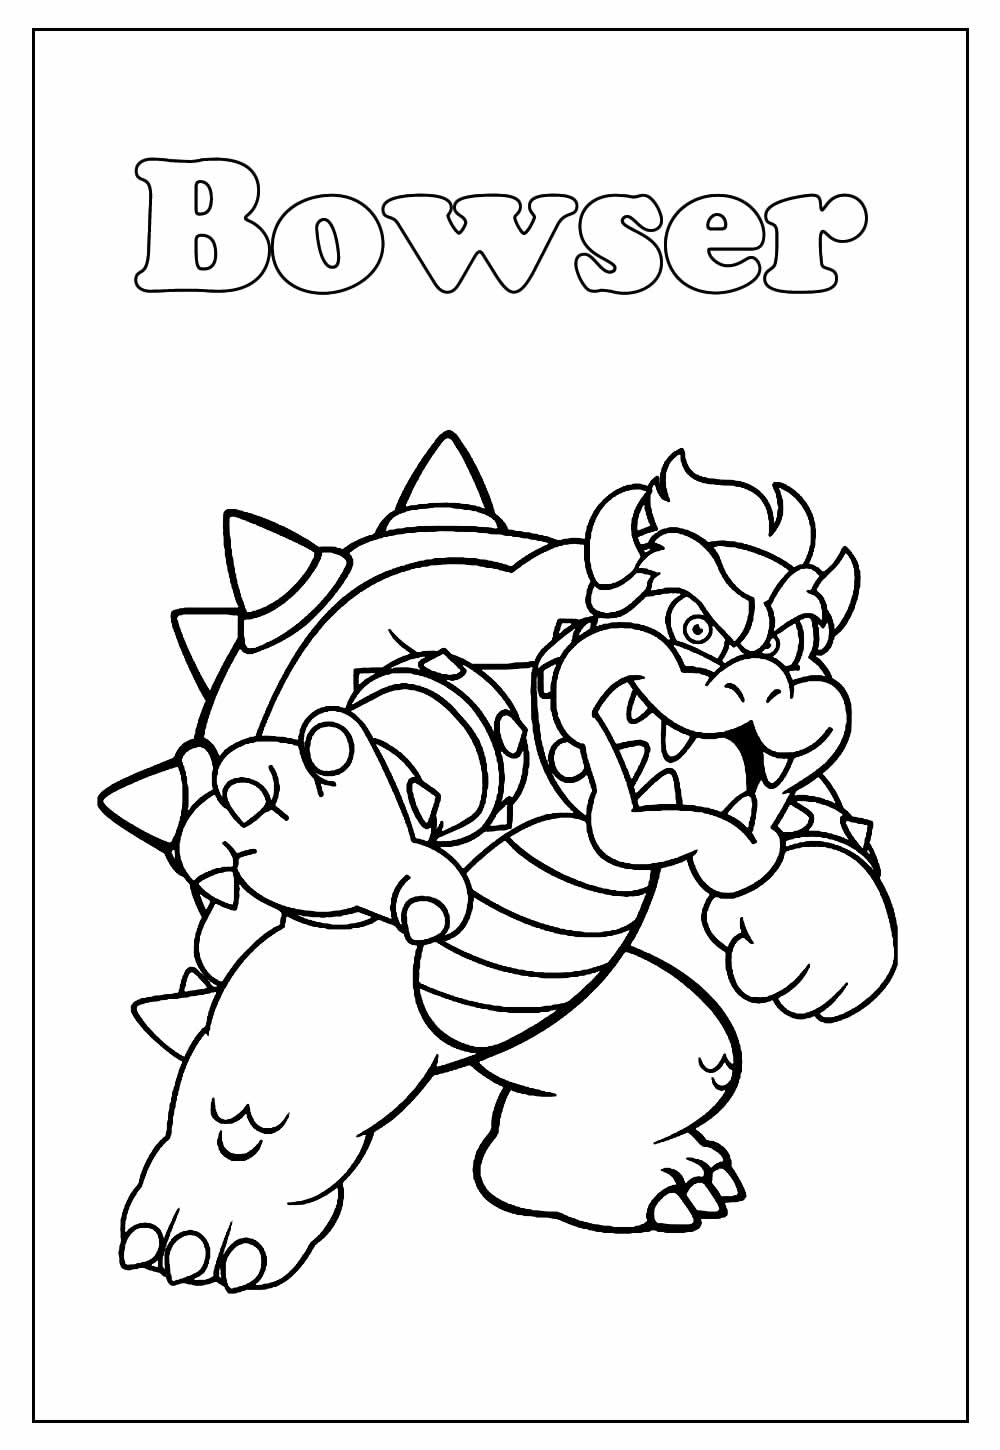 Desenho de Mario Bros para colorir - Bowser